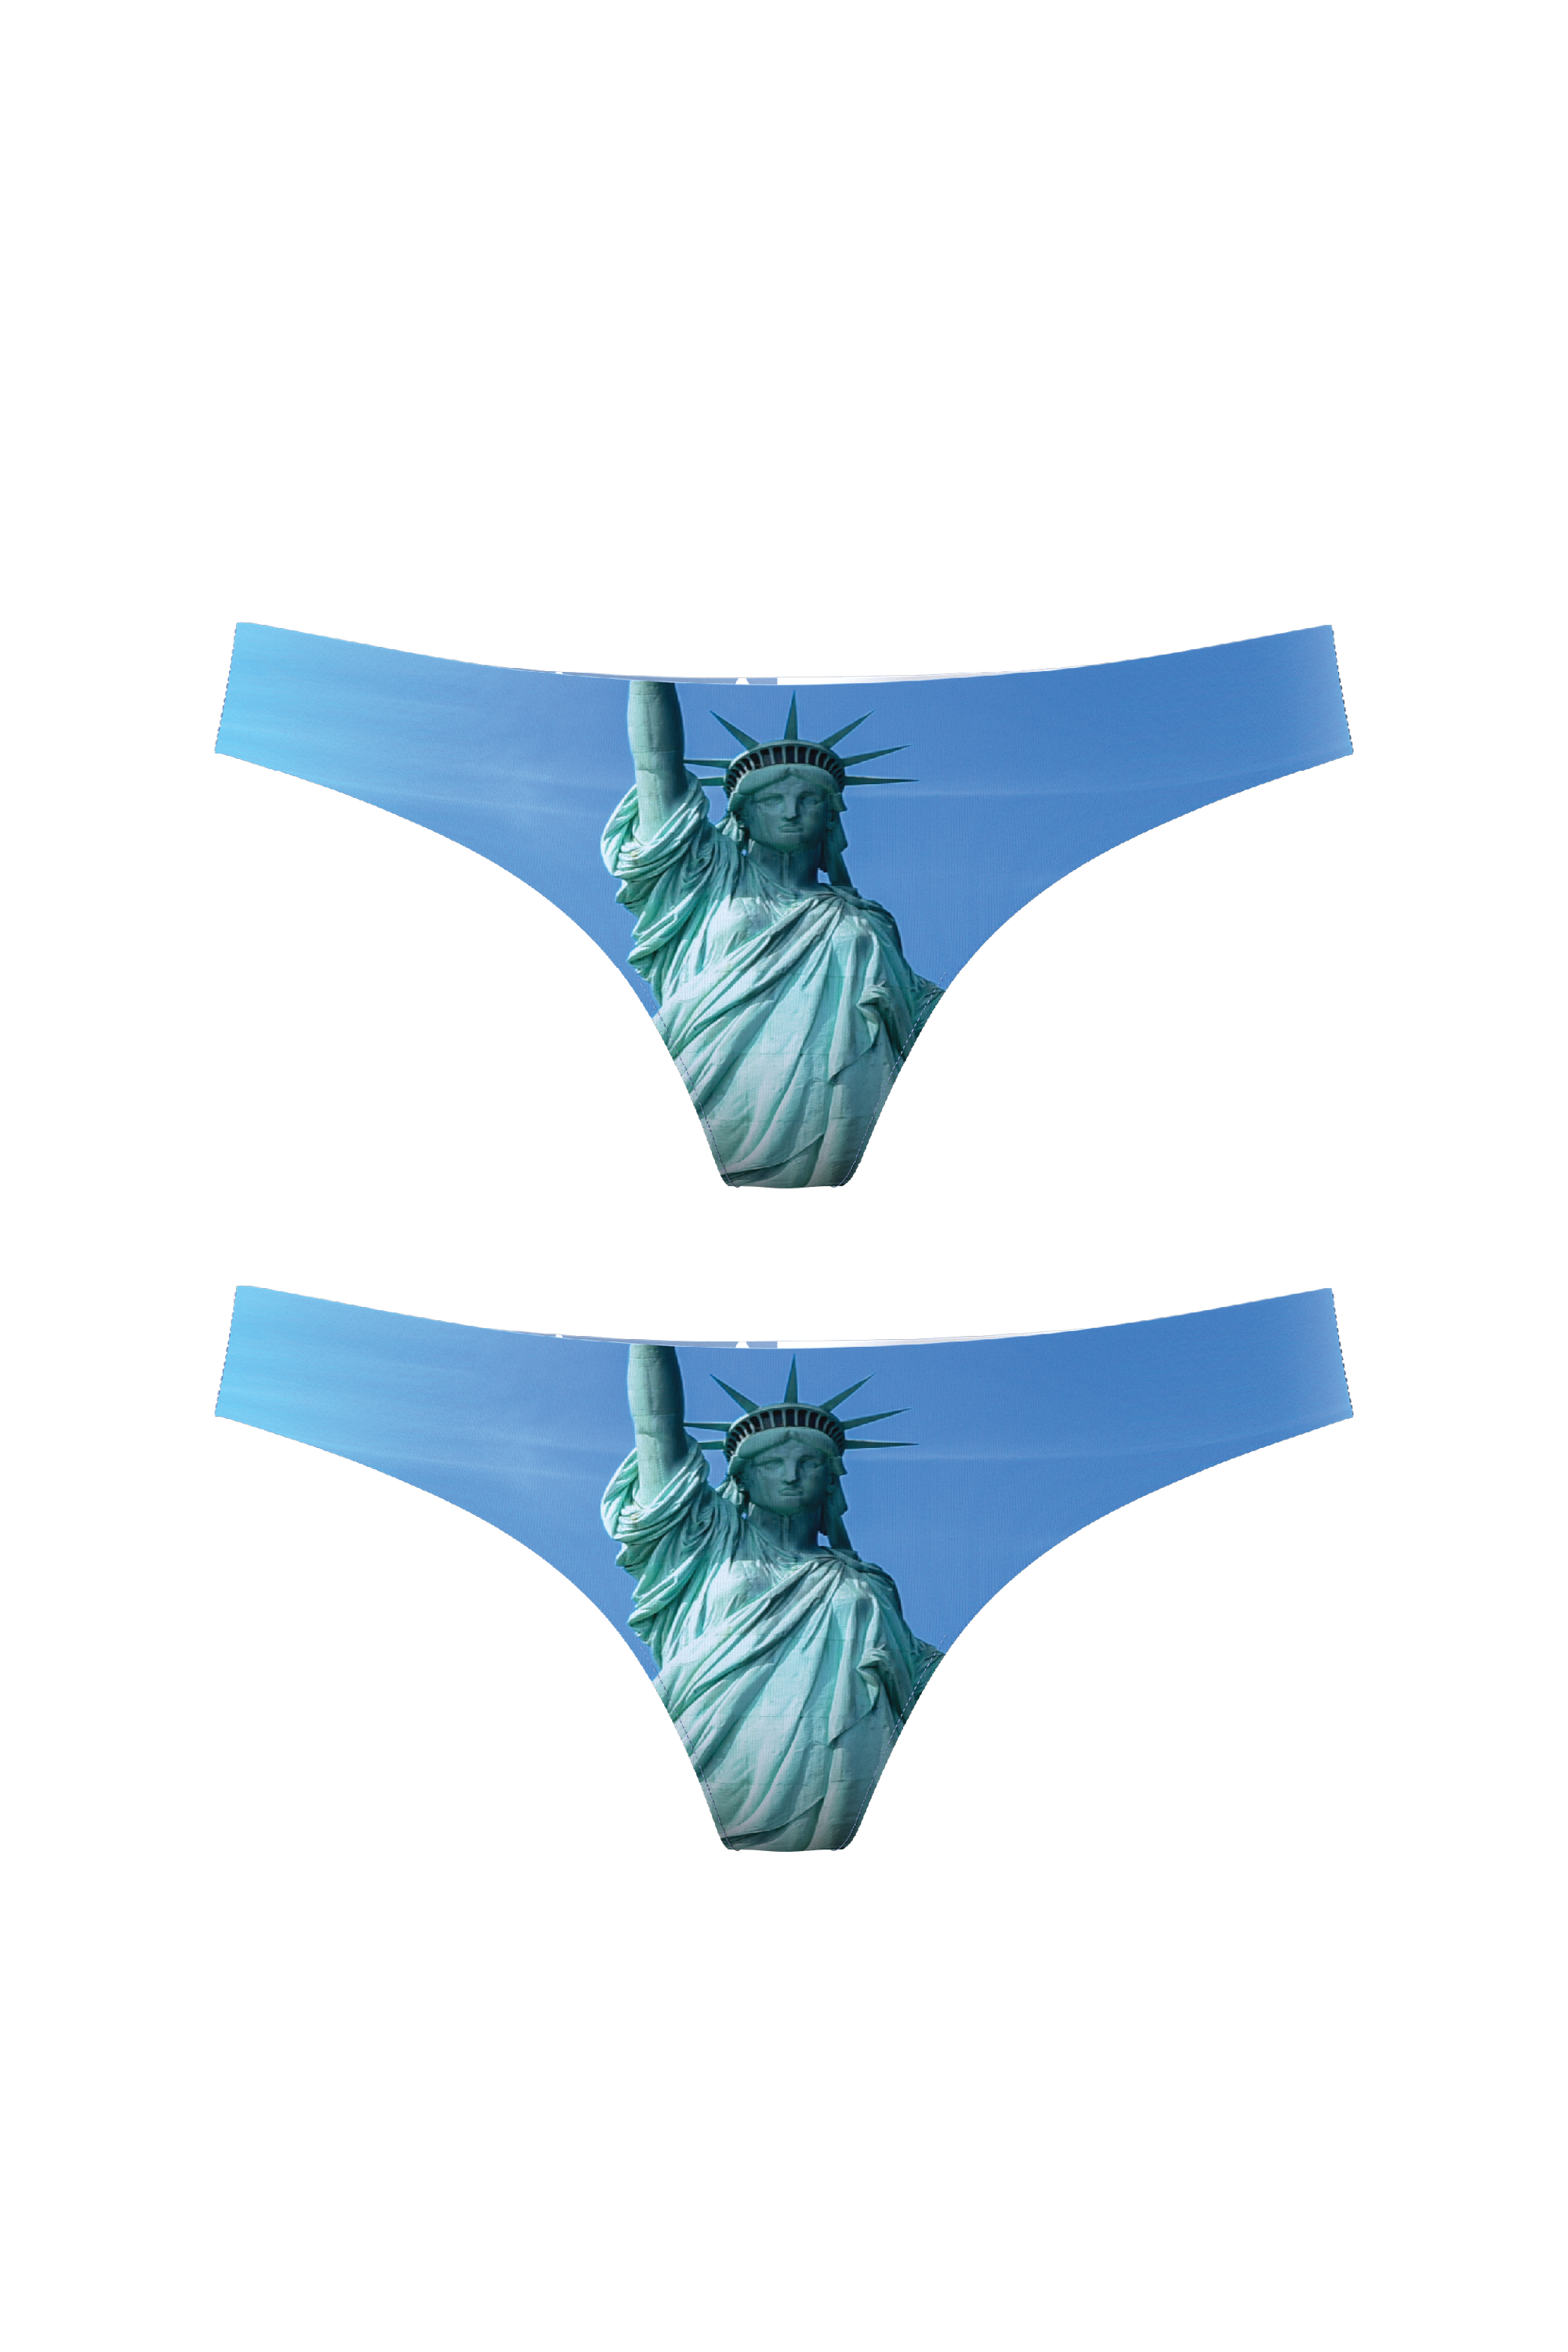 Fiancé & Fiancée Couple Retreat Set Matching Underwear Panties and